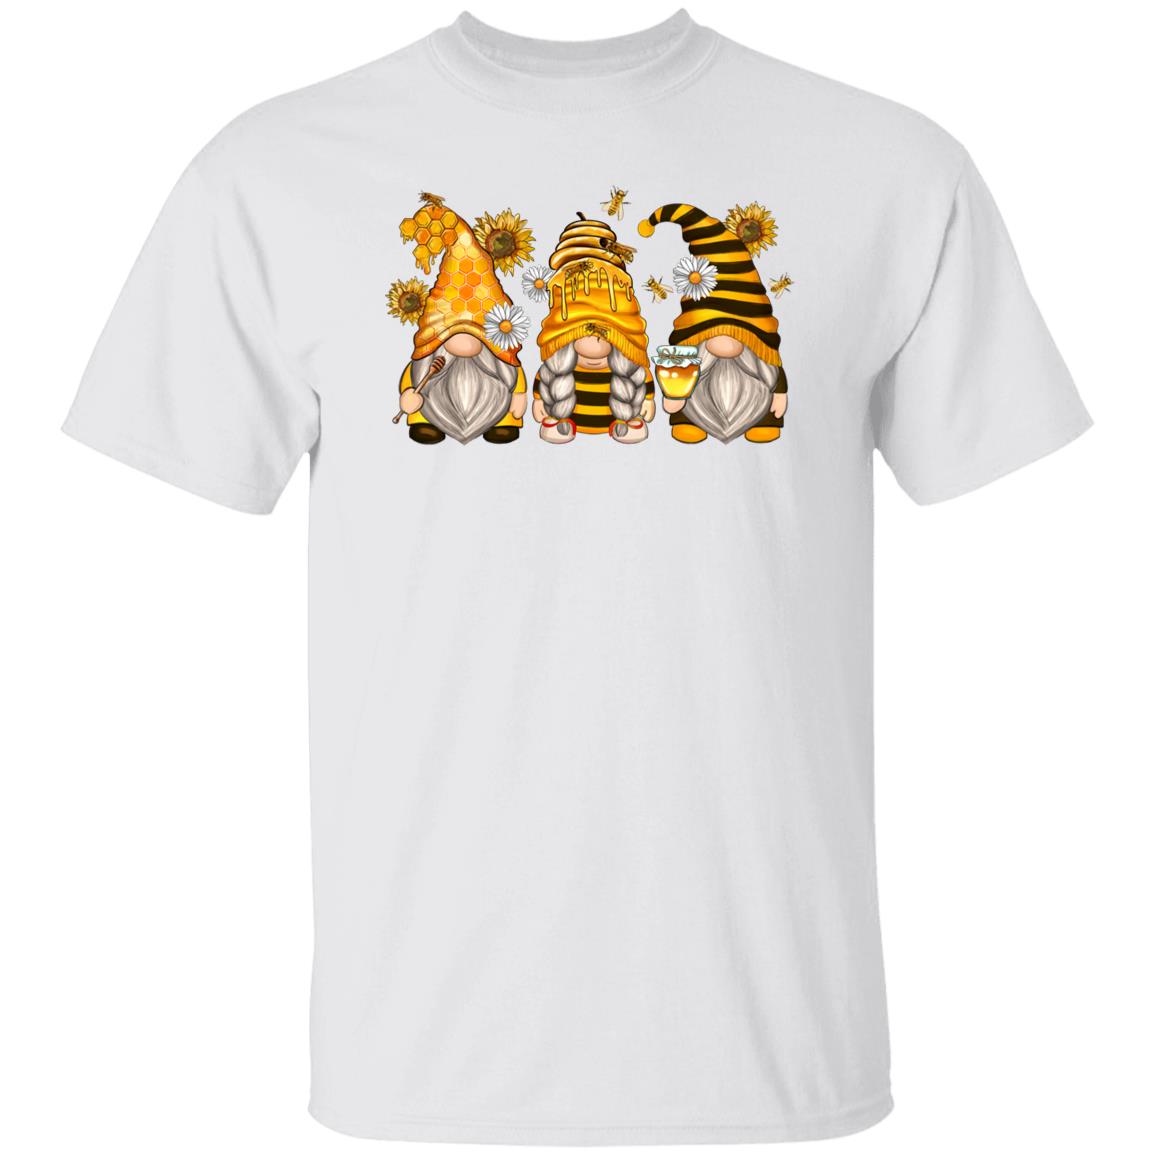 Bumble bee Gnomes Unisex shirt honey lover Christmas gift White Sand-Family-Gift-Planet